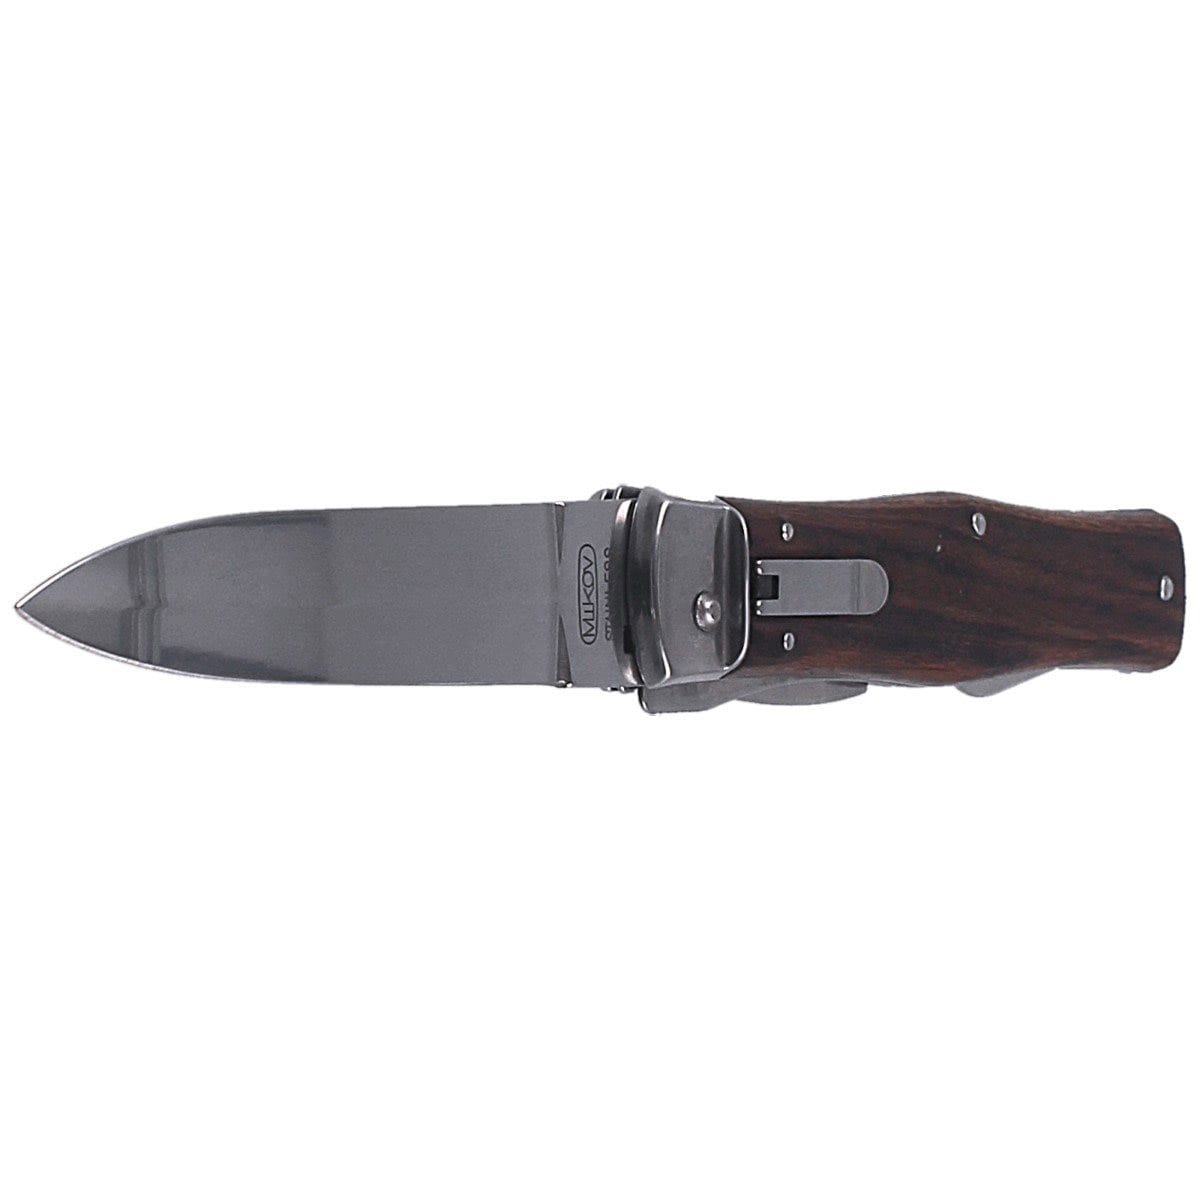 Nóż sprężynowy Mikov Predator 241-ND-3/KP Wood